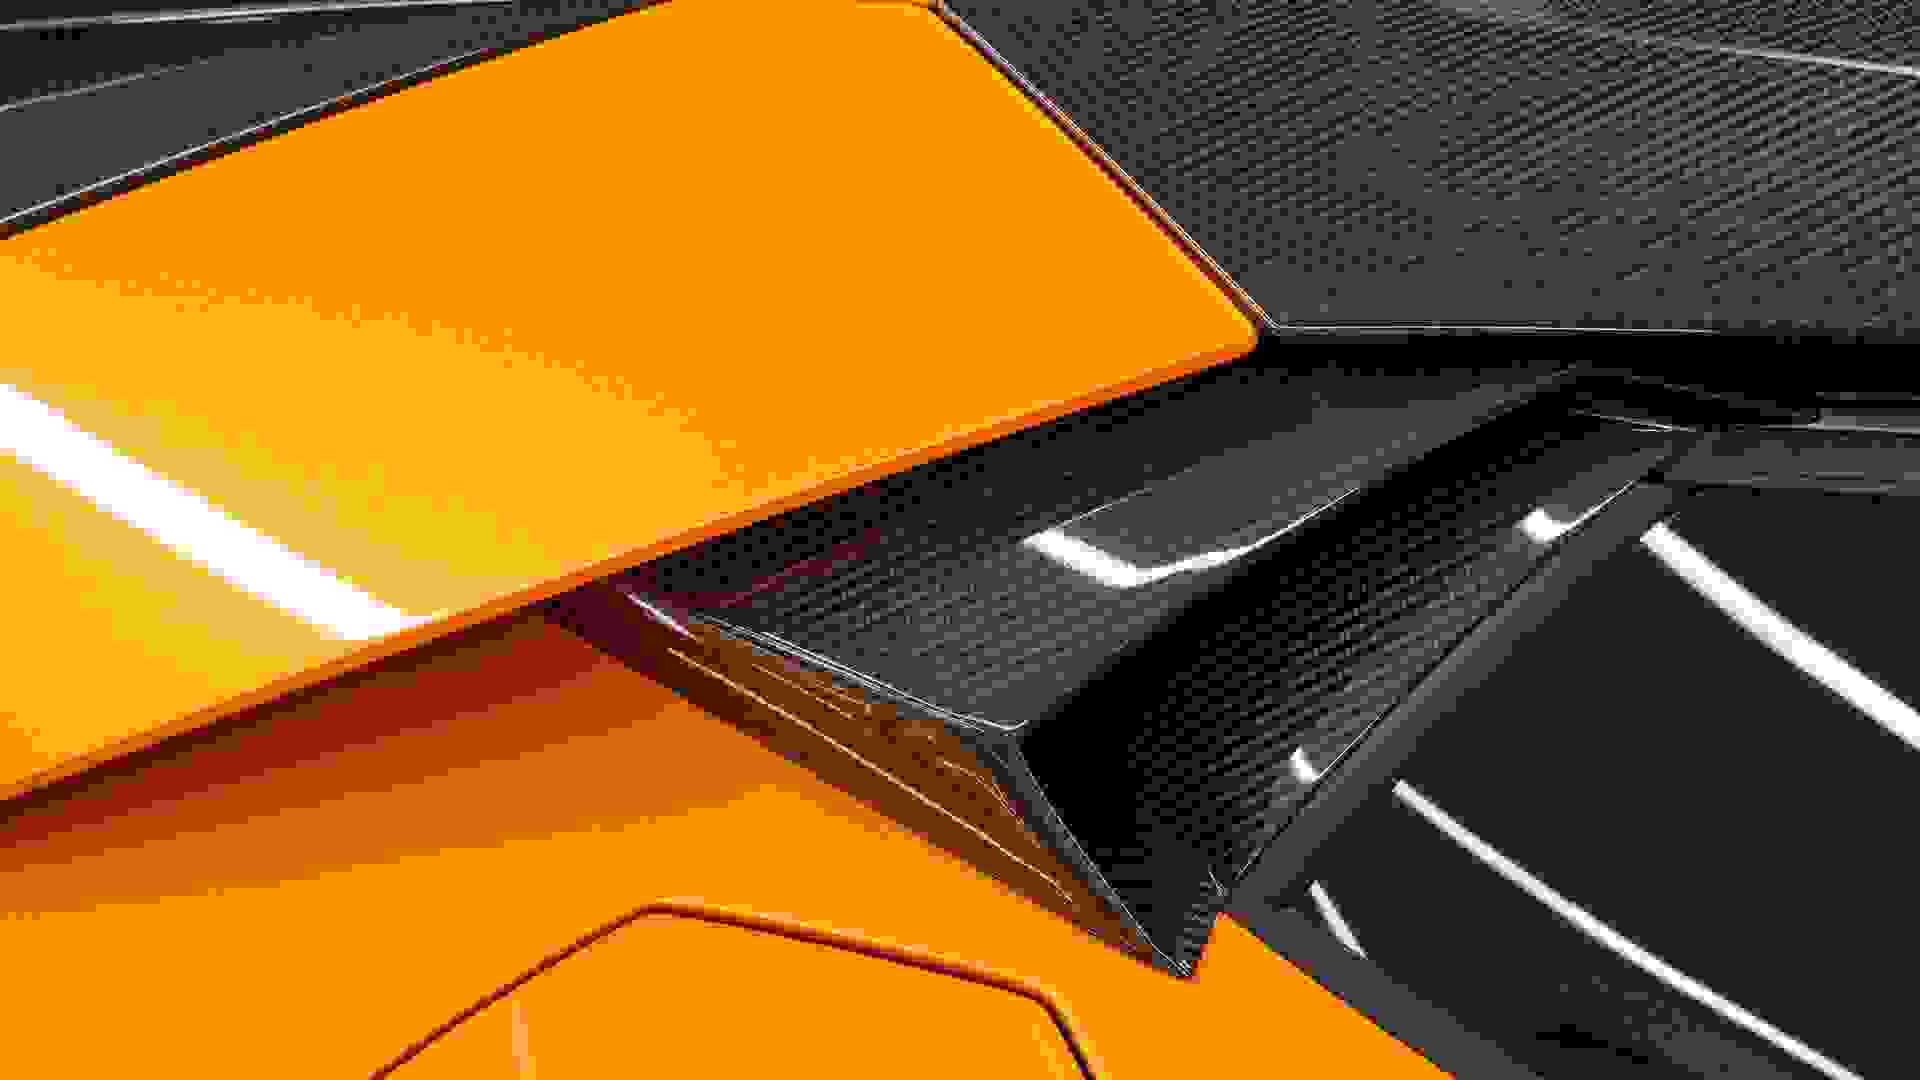 Lamborghini AVENTADOR SV Photo b53ab675-947b-485a-a575-08fe2644d252.jpg